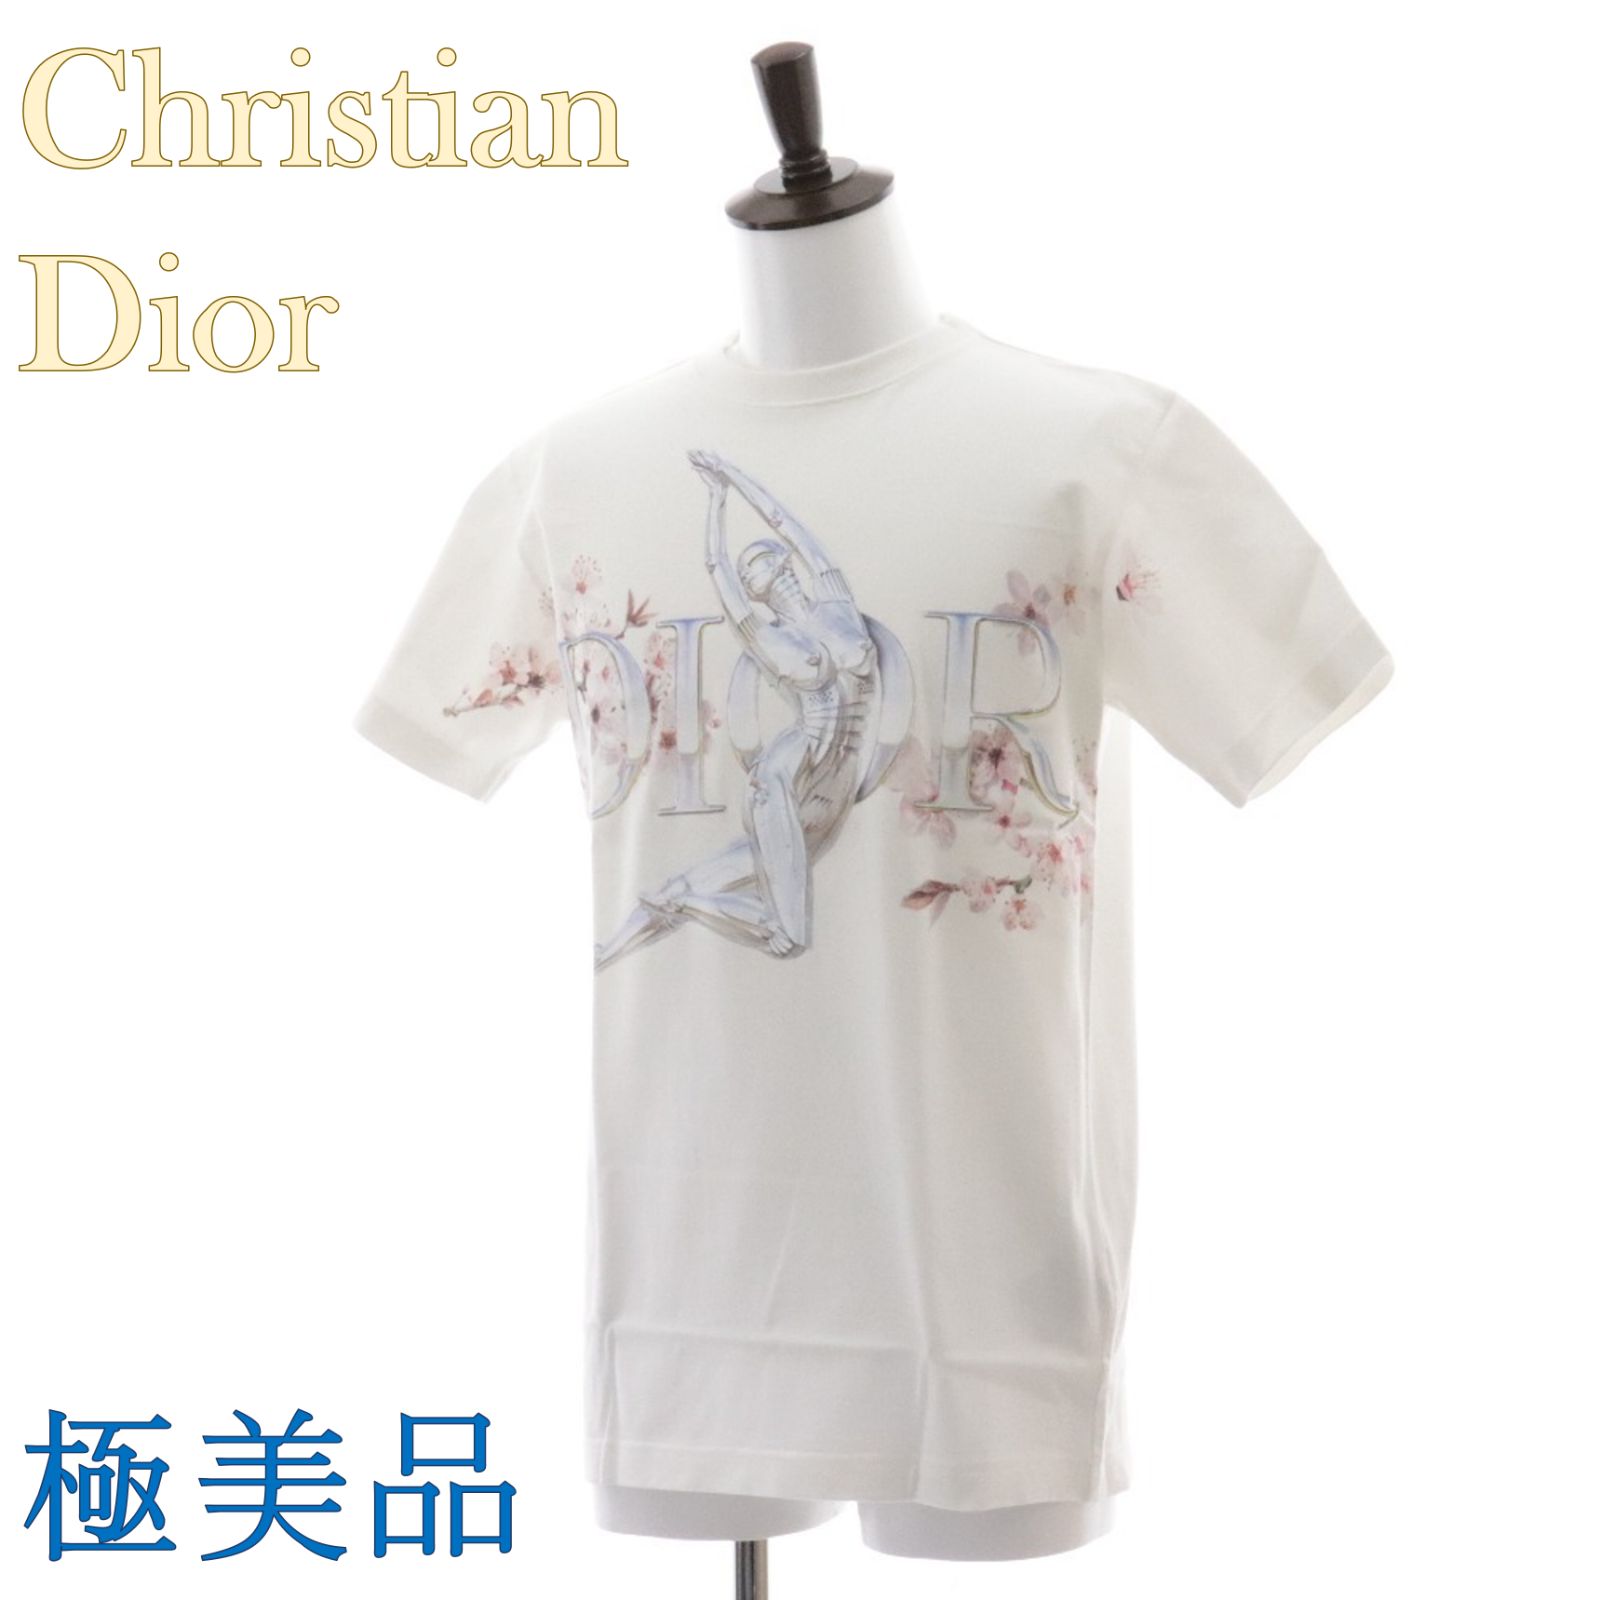 Dior tシャツ SORAYAMA コラボ セクシーロボ-